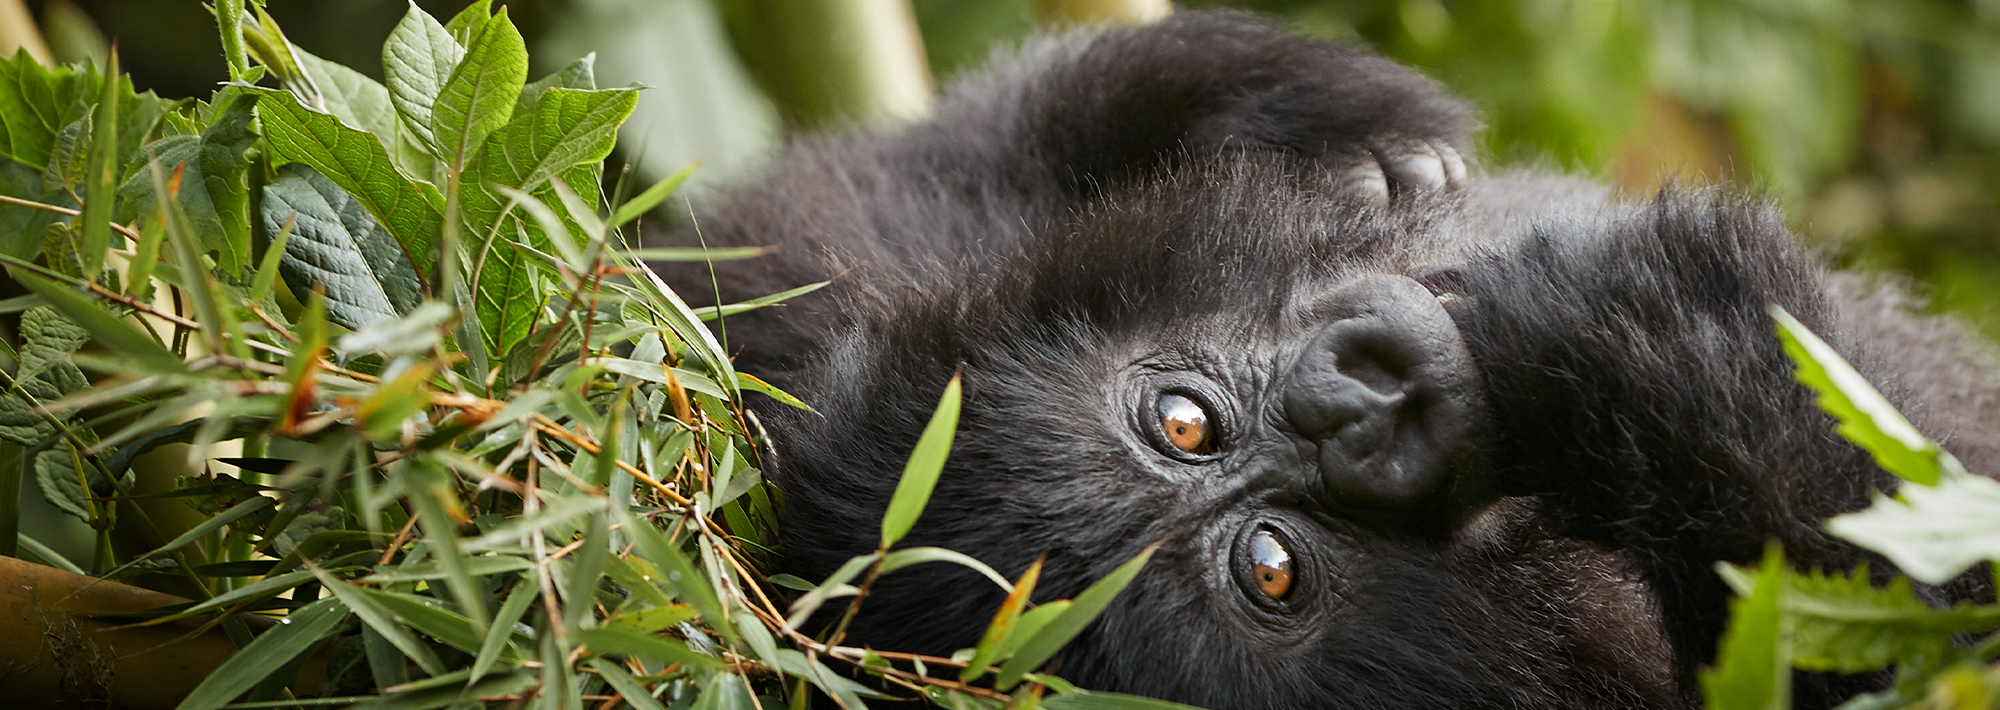 Double gorilla trekking in Uganda and Rwanda